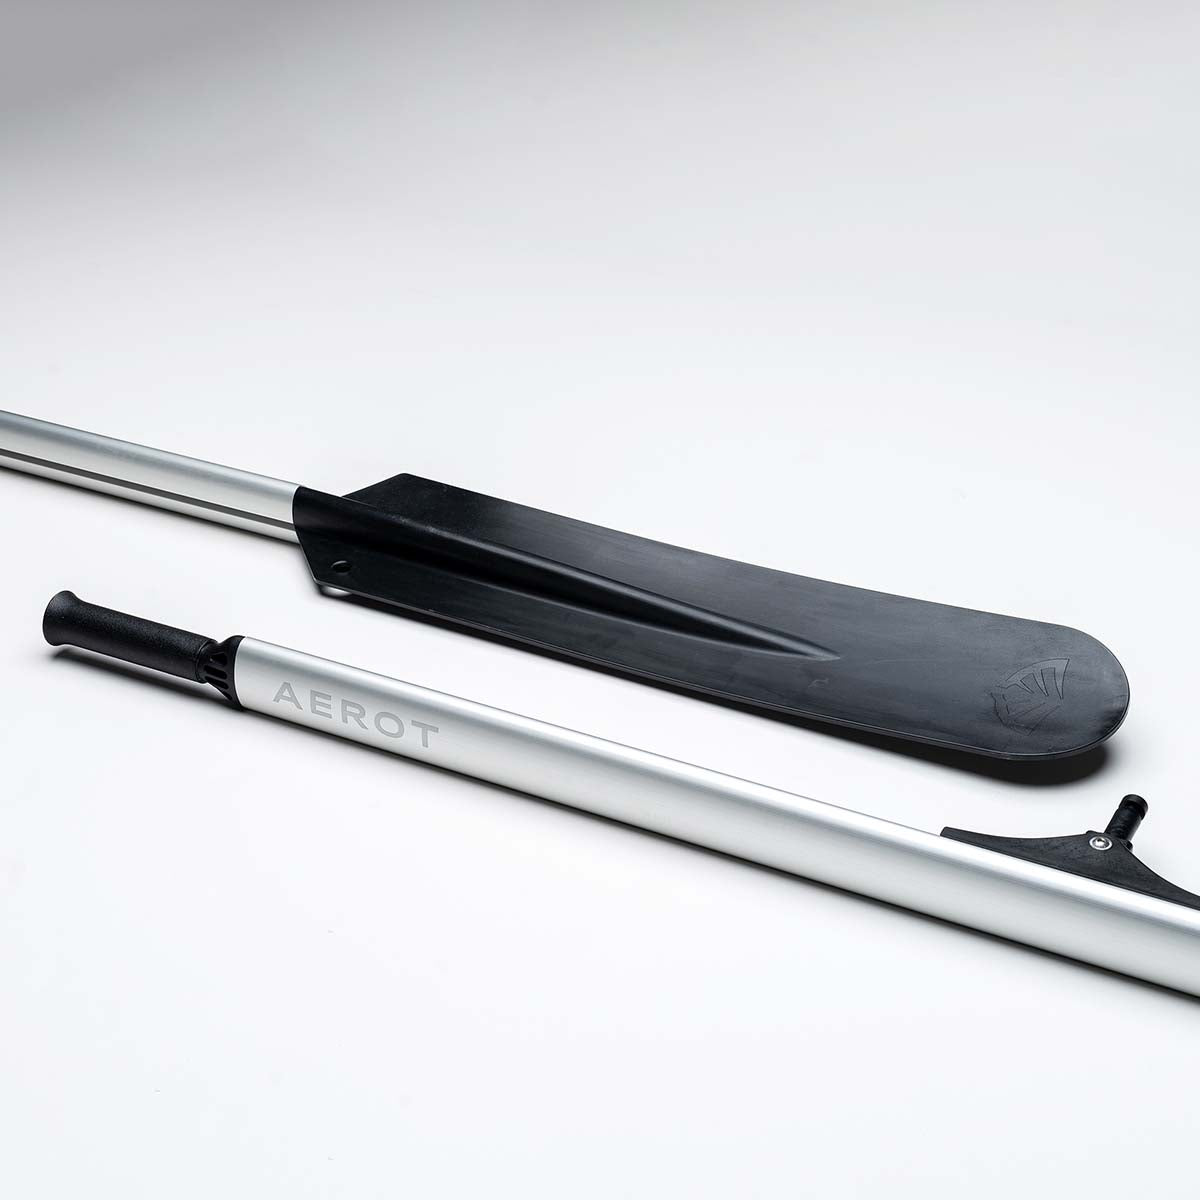 Aerot® – Tunto (Oars with straight handle)